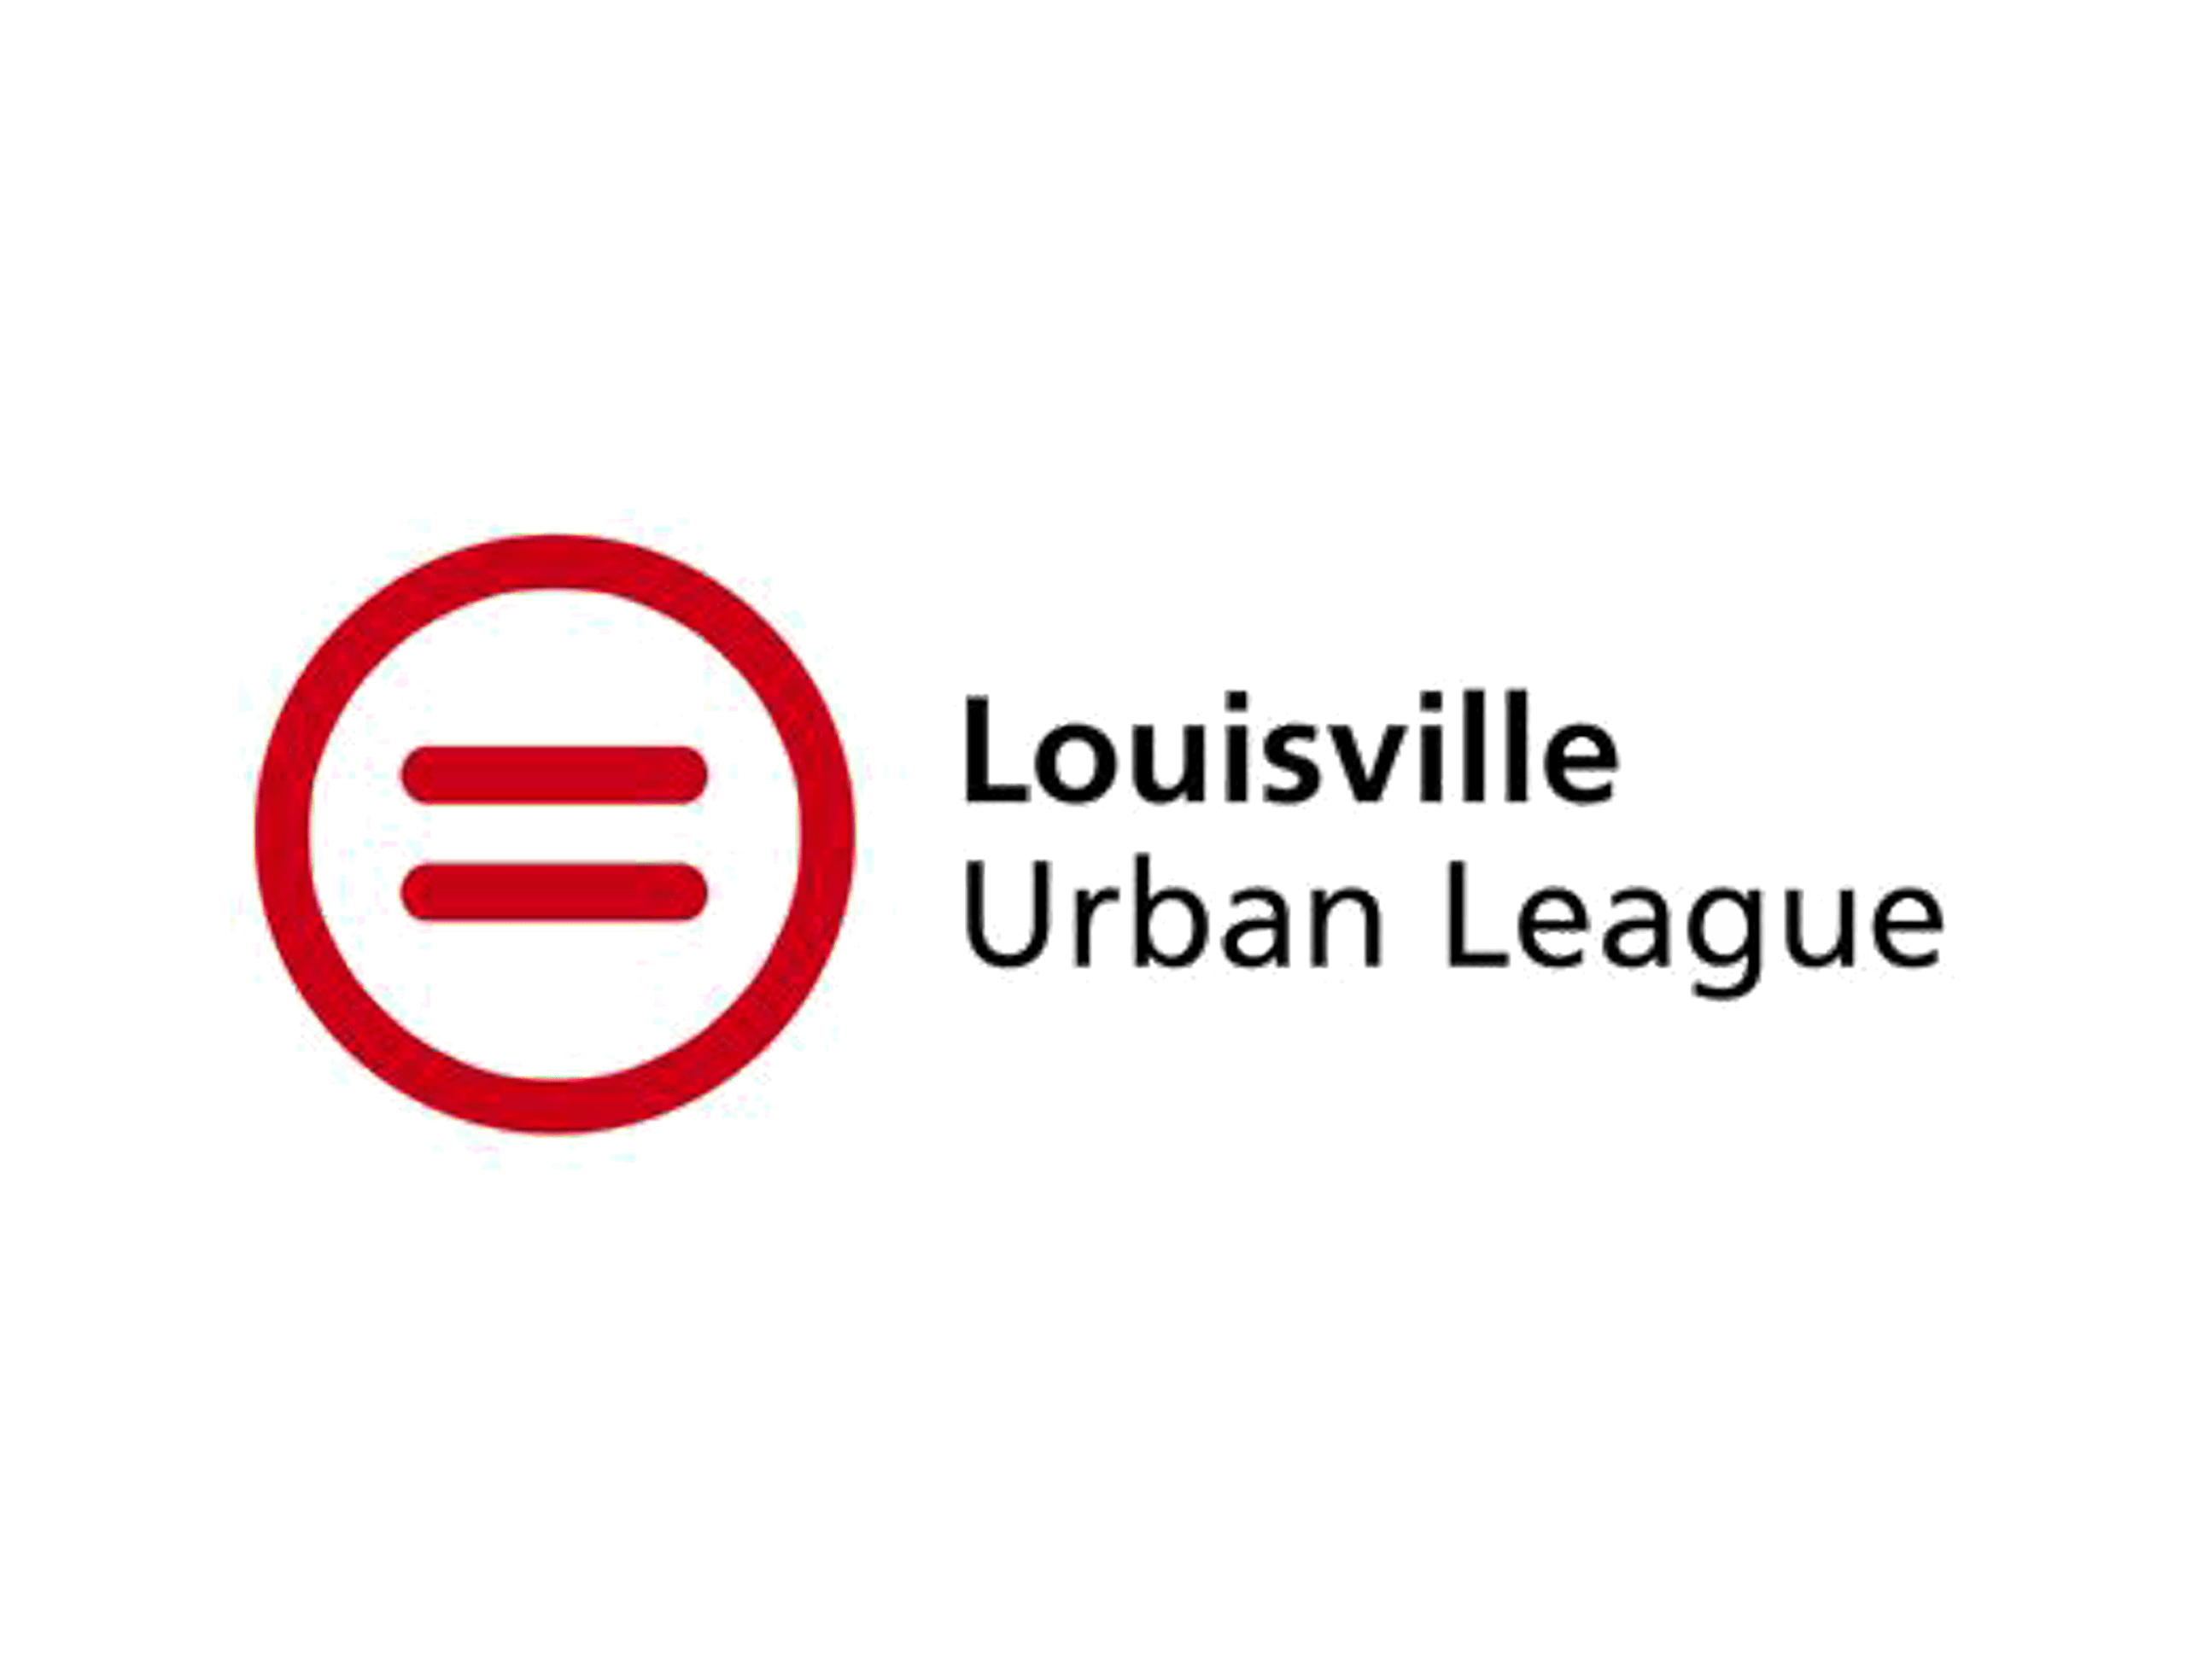 LouisvilleUrbanLeague_FirstDollarPageLogo-copy